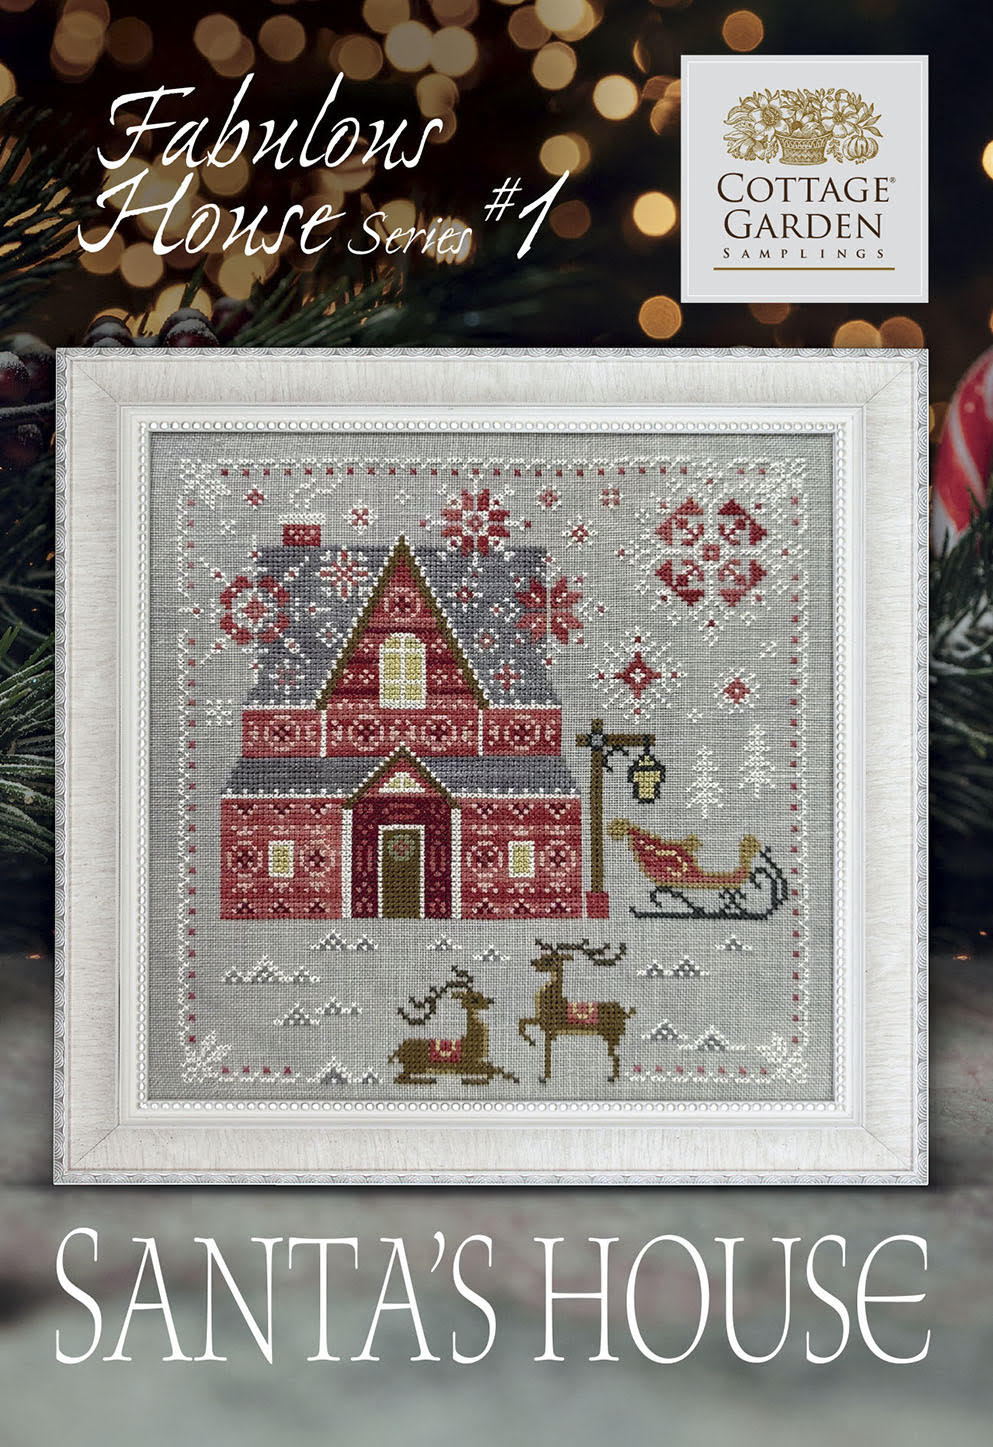 Fabulous House #1 Santa's House by Cottage Garden Samplings Cross Stitch Pattern PHYSICAL copy